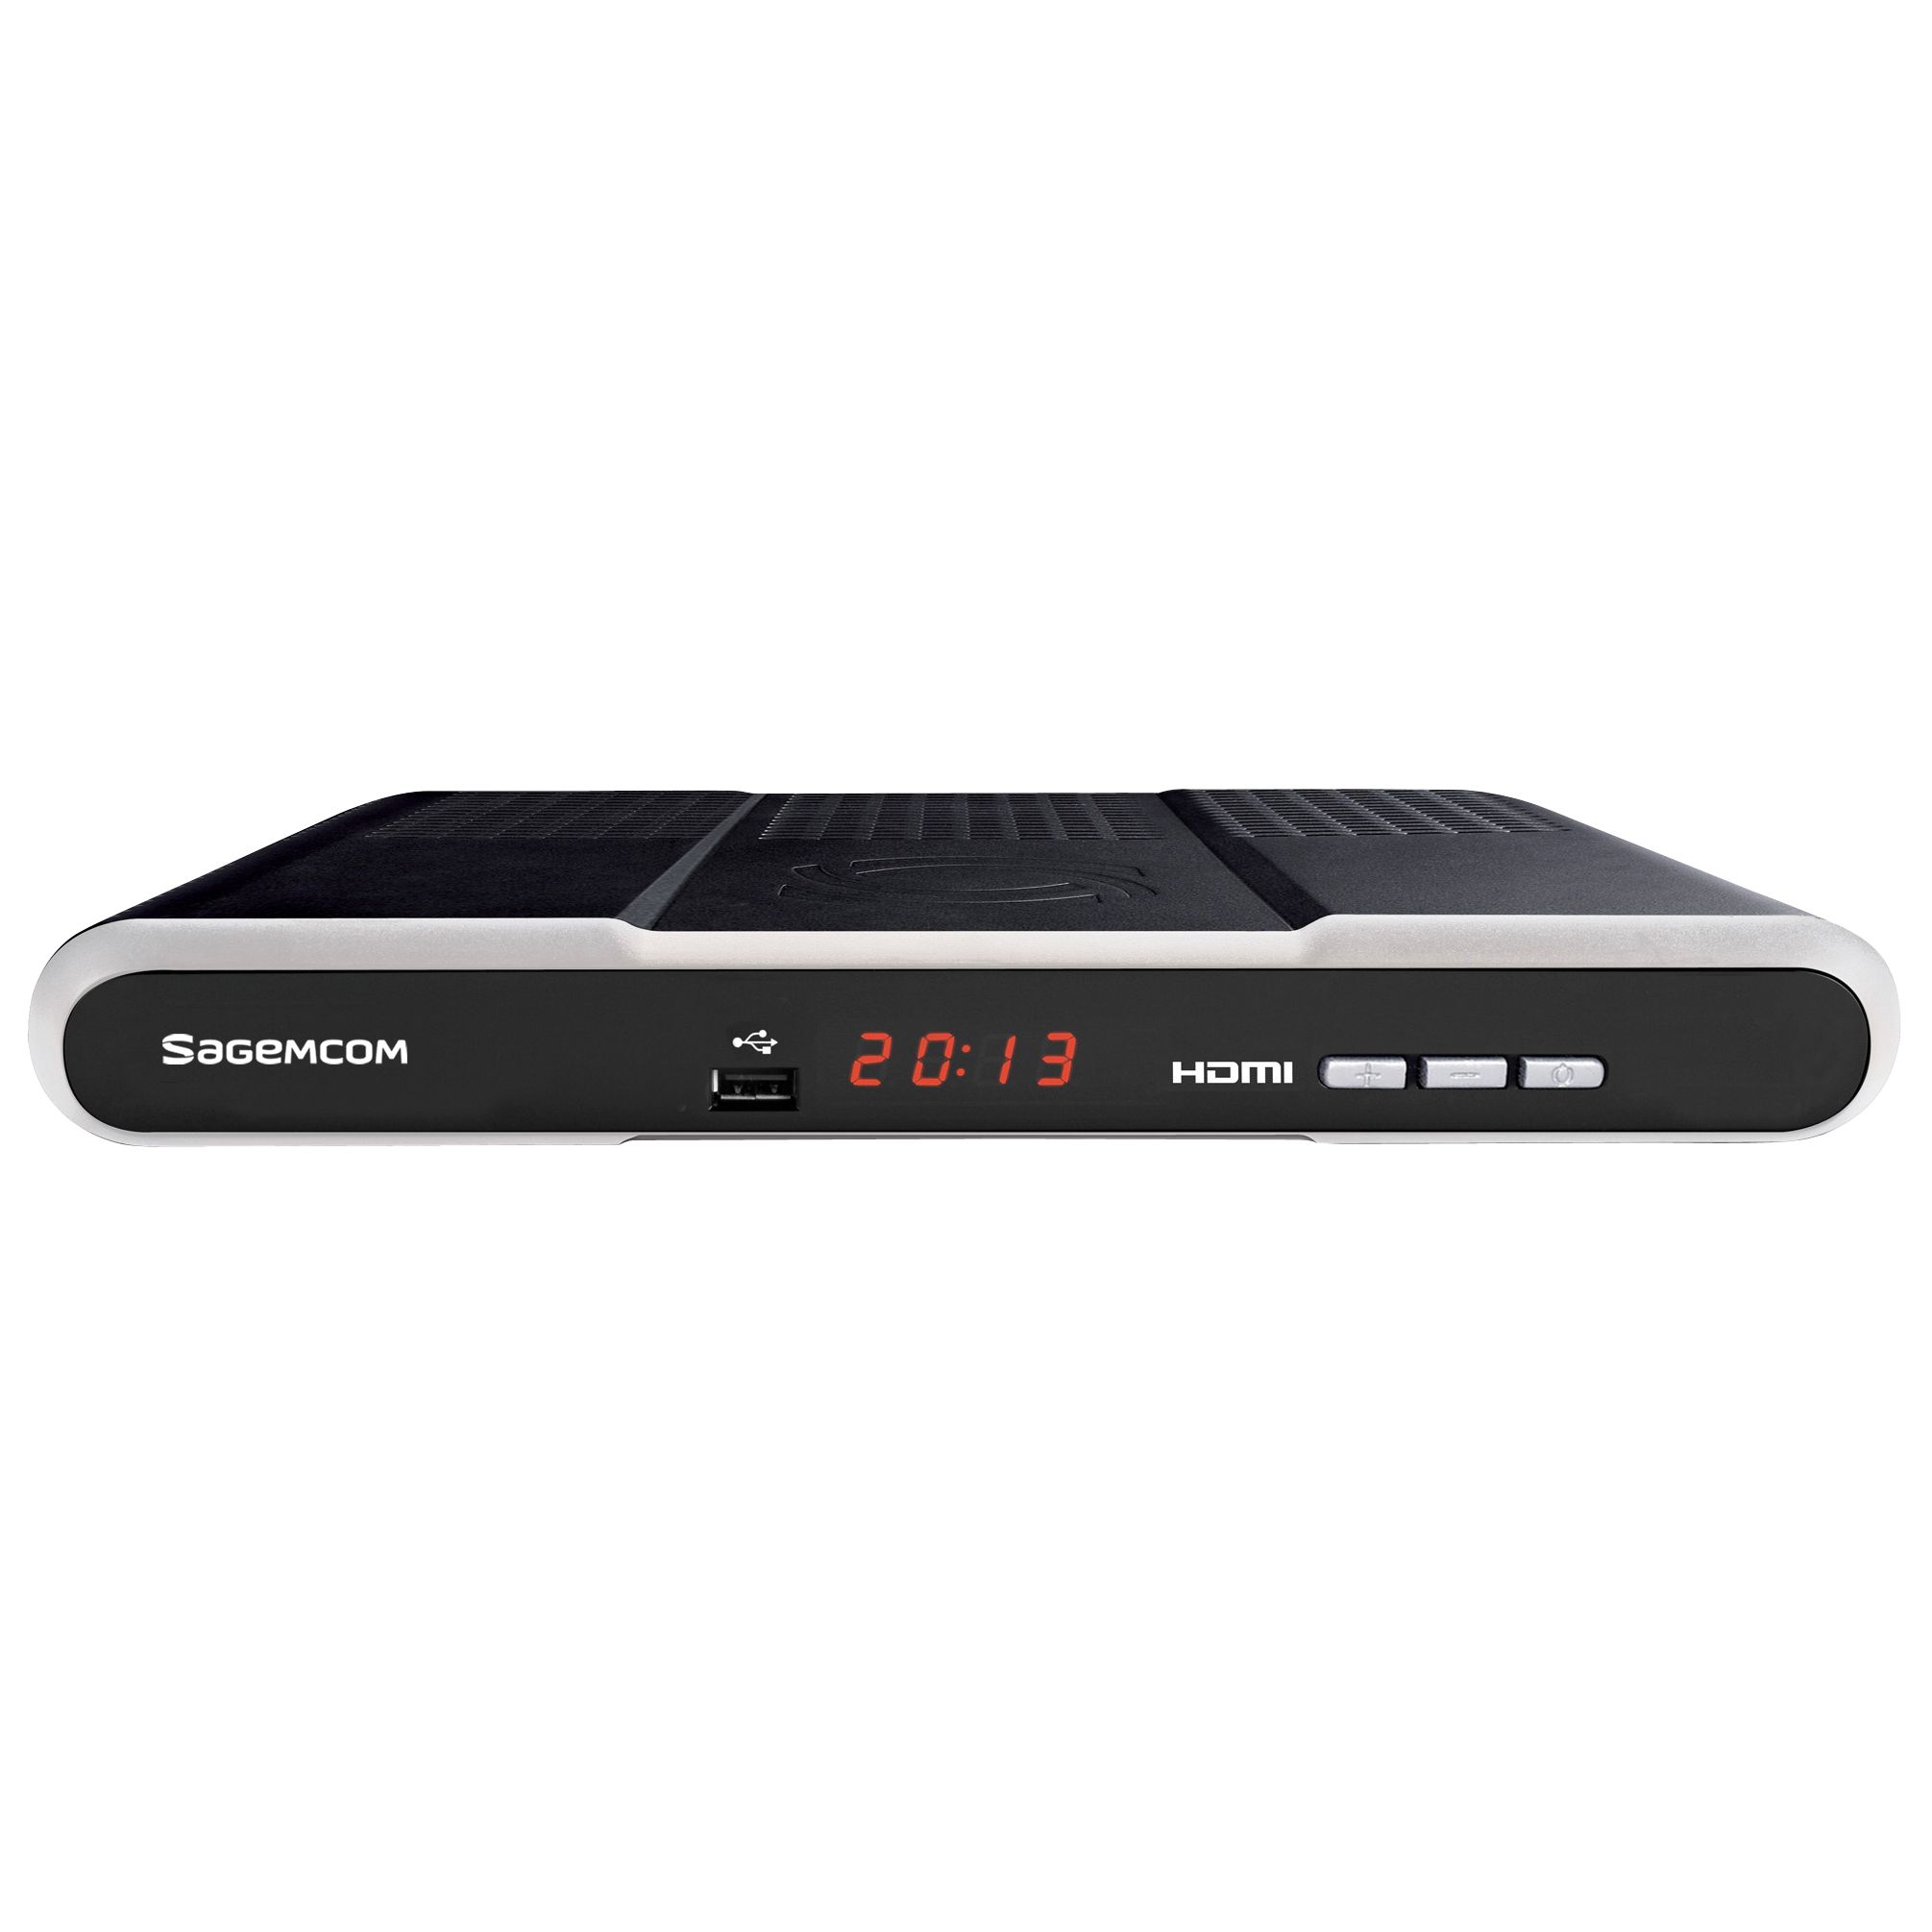 Sagemcom DTR-67500 500GB Freeview Digital TV Recorder at John Lewis